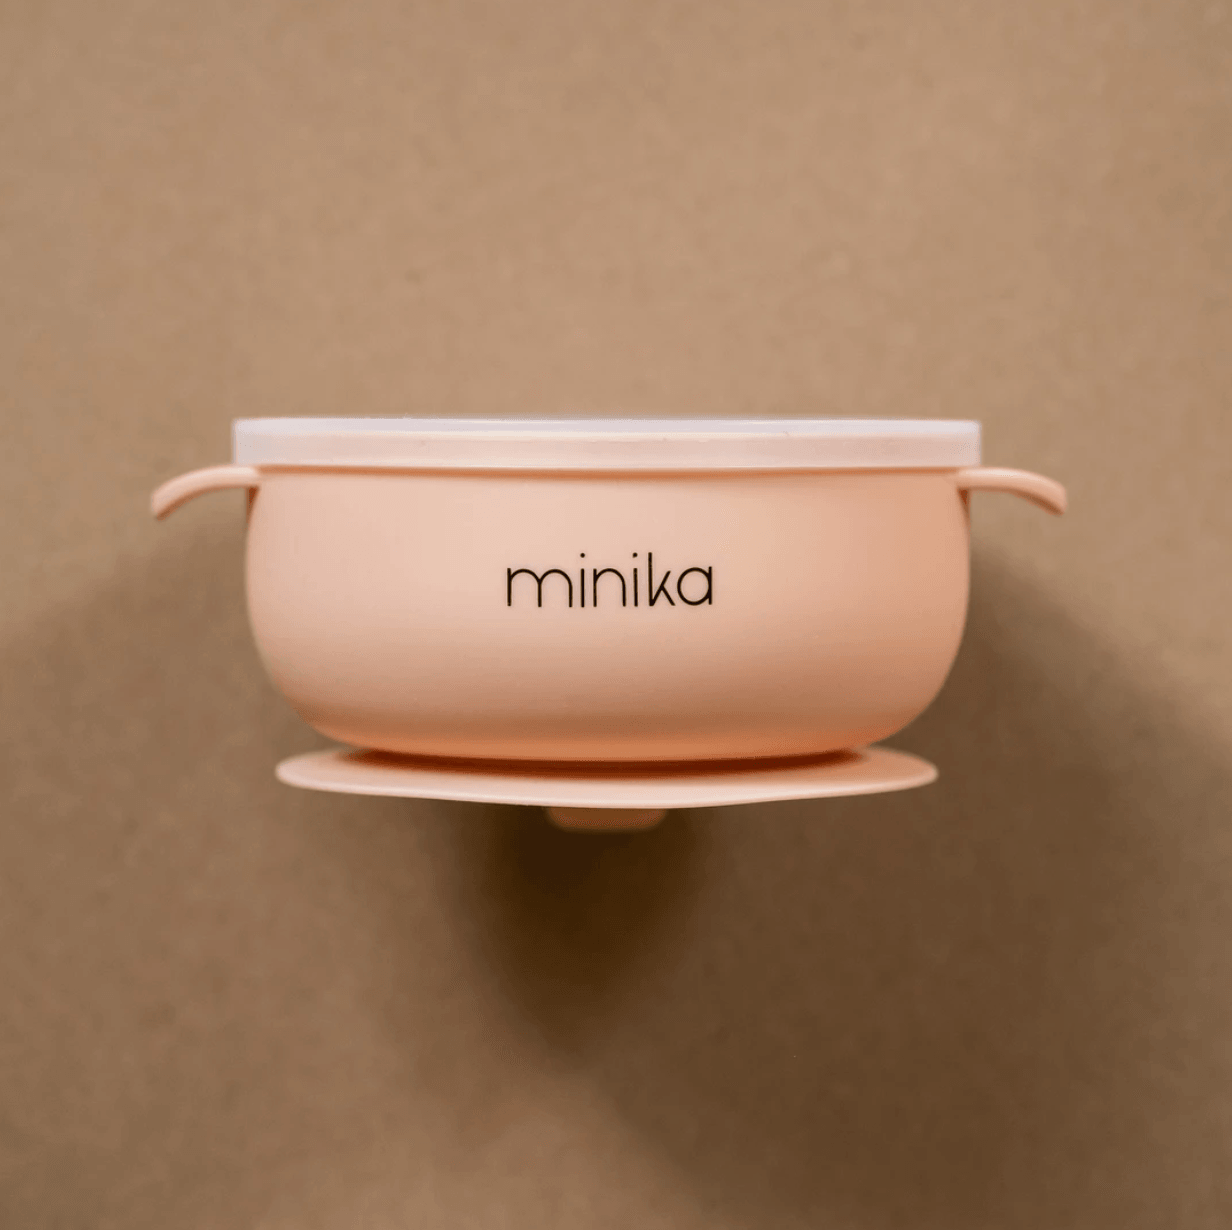 Minica blush colour silicone bowl with lids